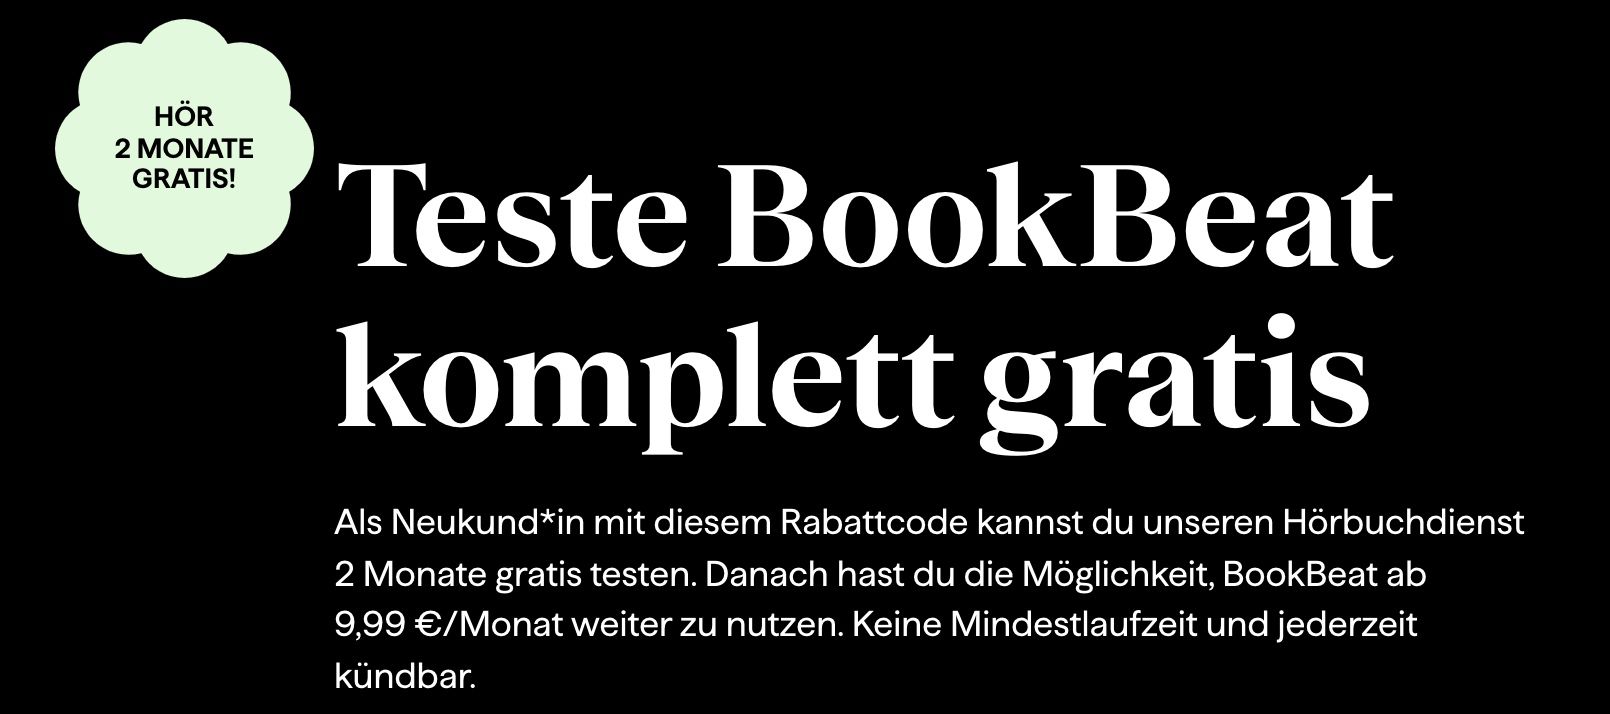 BookBeat Hörbuch Service 8 Wochen GRATIS ausprobieren